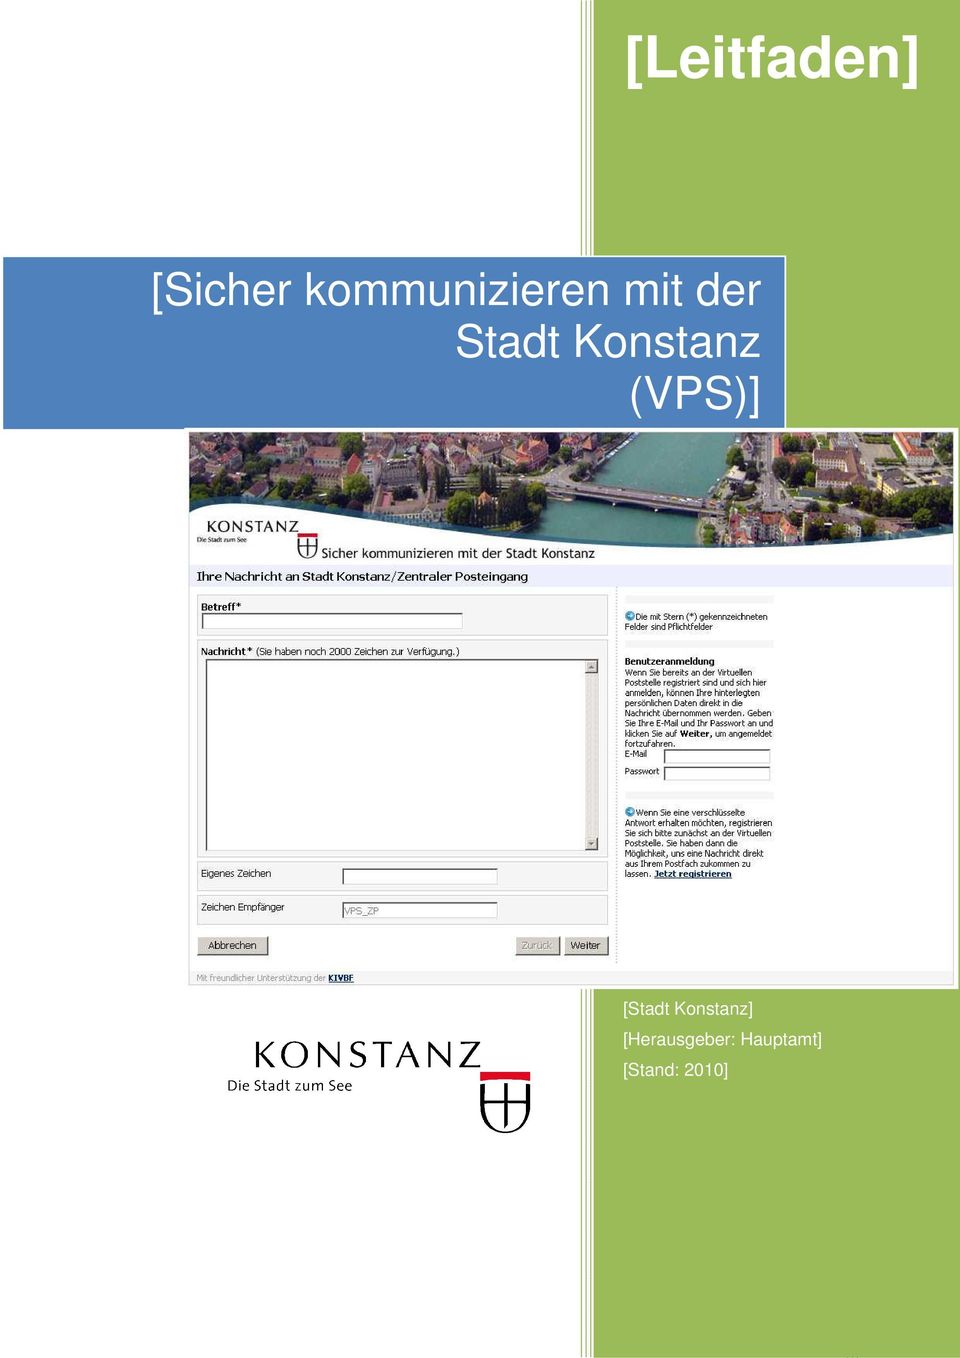 Konstanz (VPS)] [Stadt Konstanz]